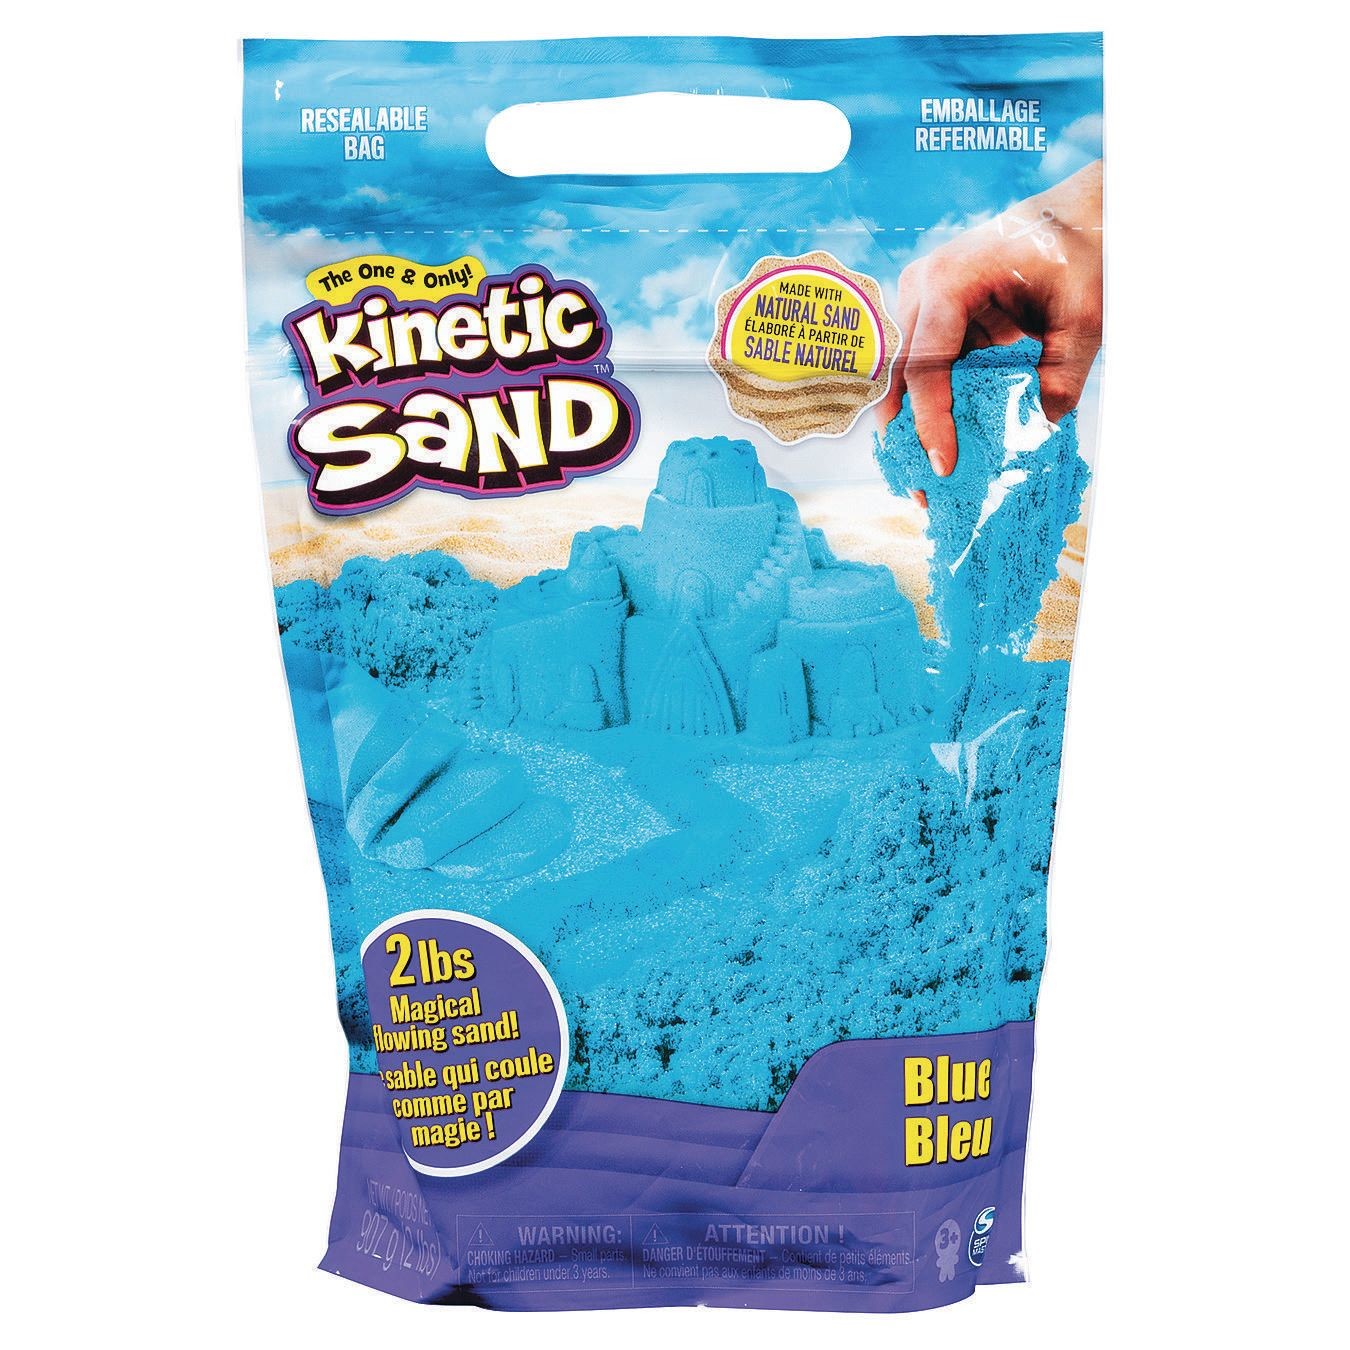 Buy Kinetic Sand, 2 lbs. at S&S Worldwide